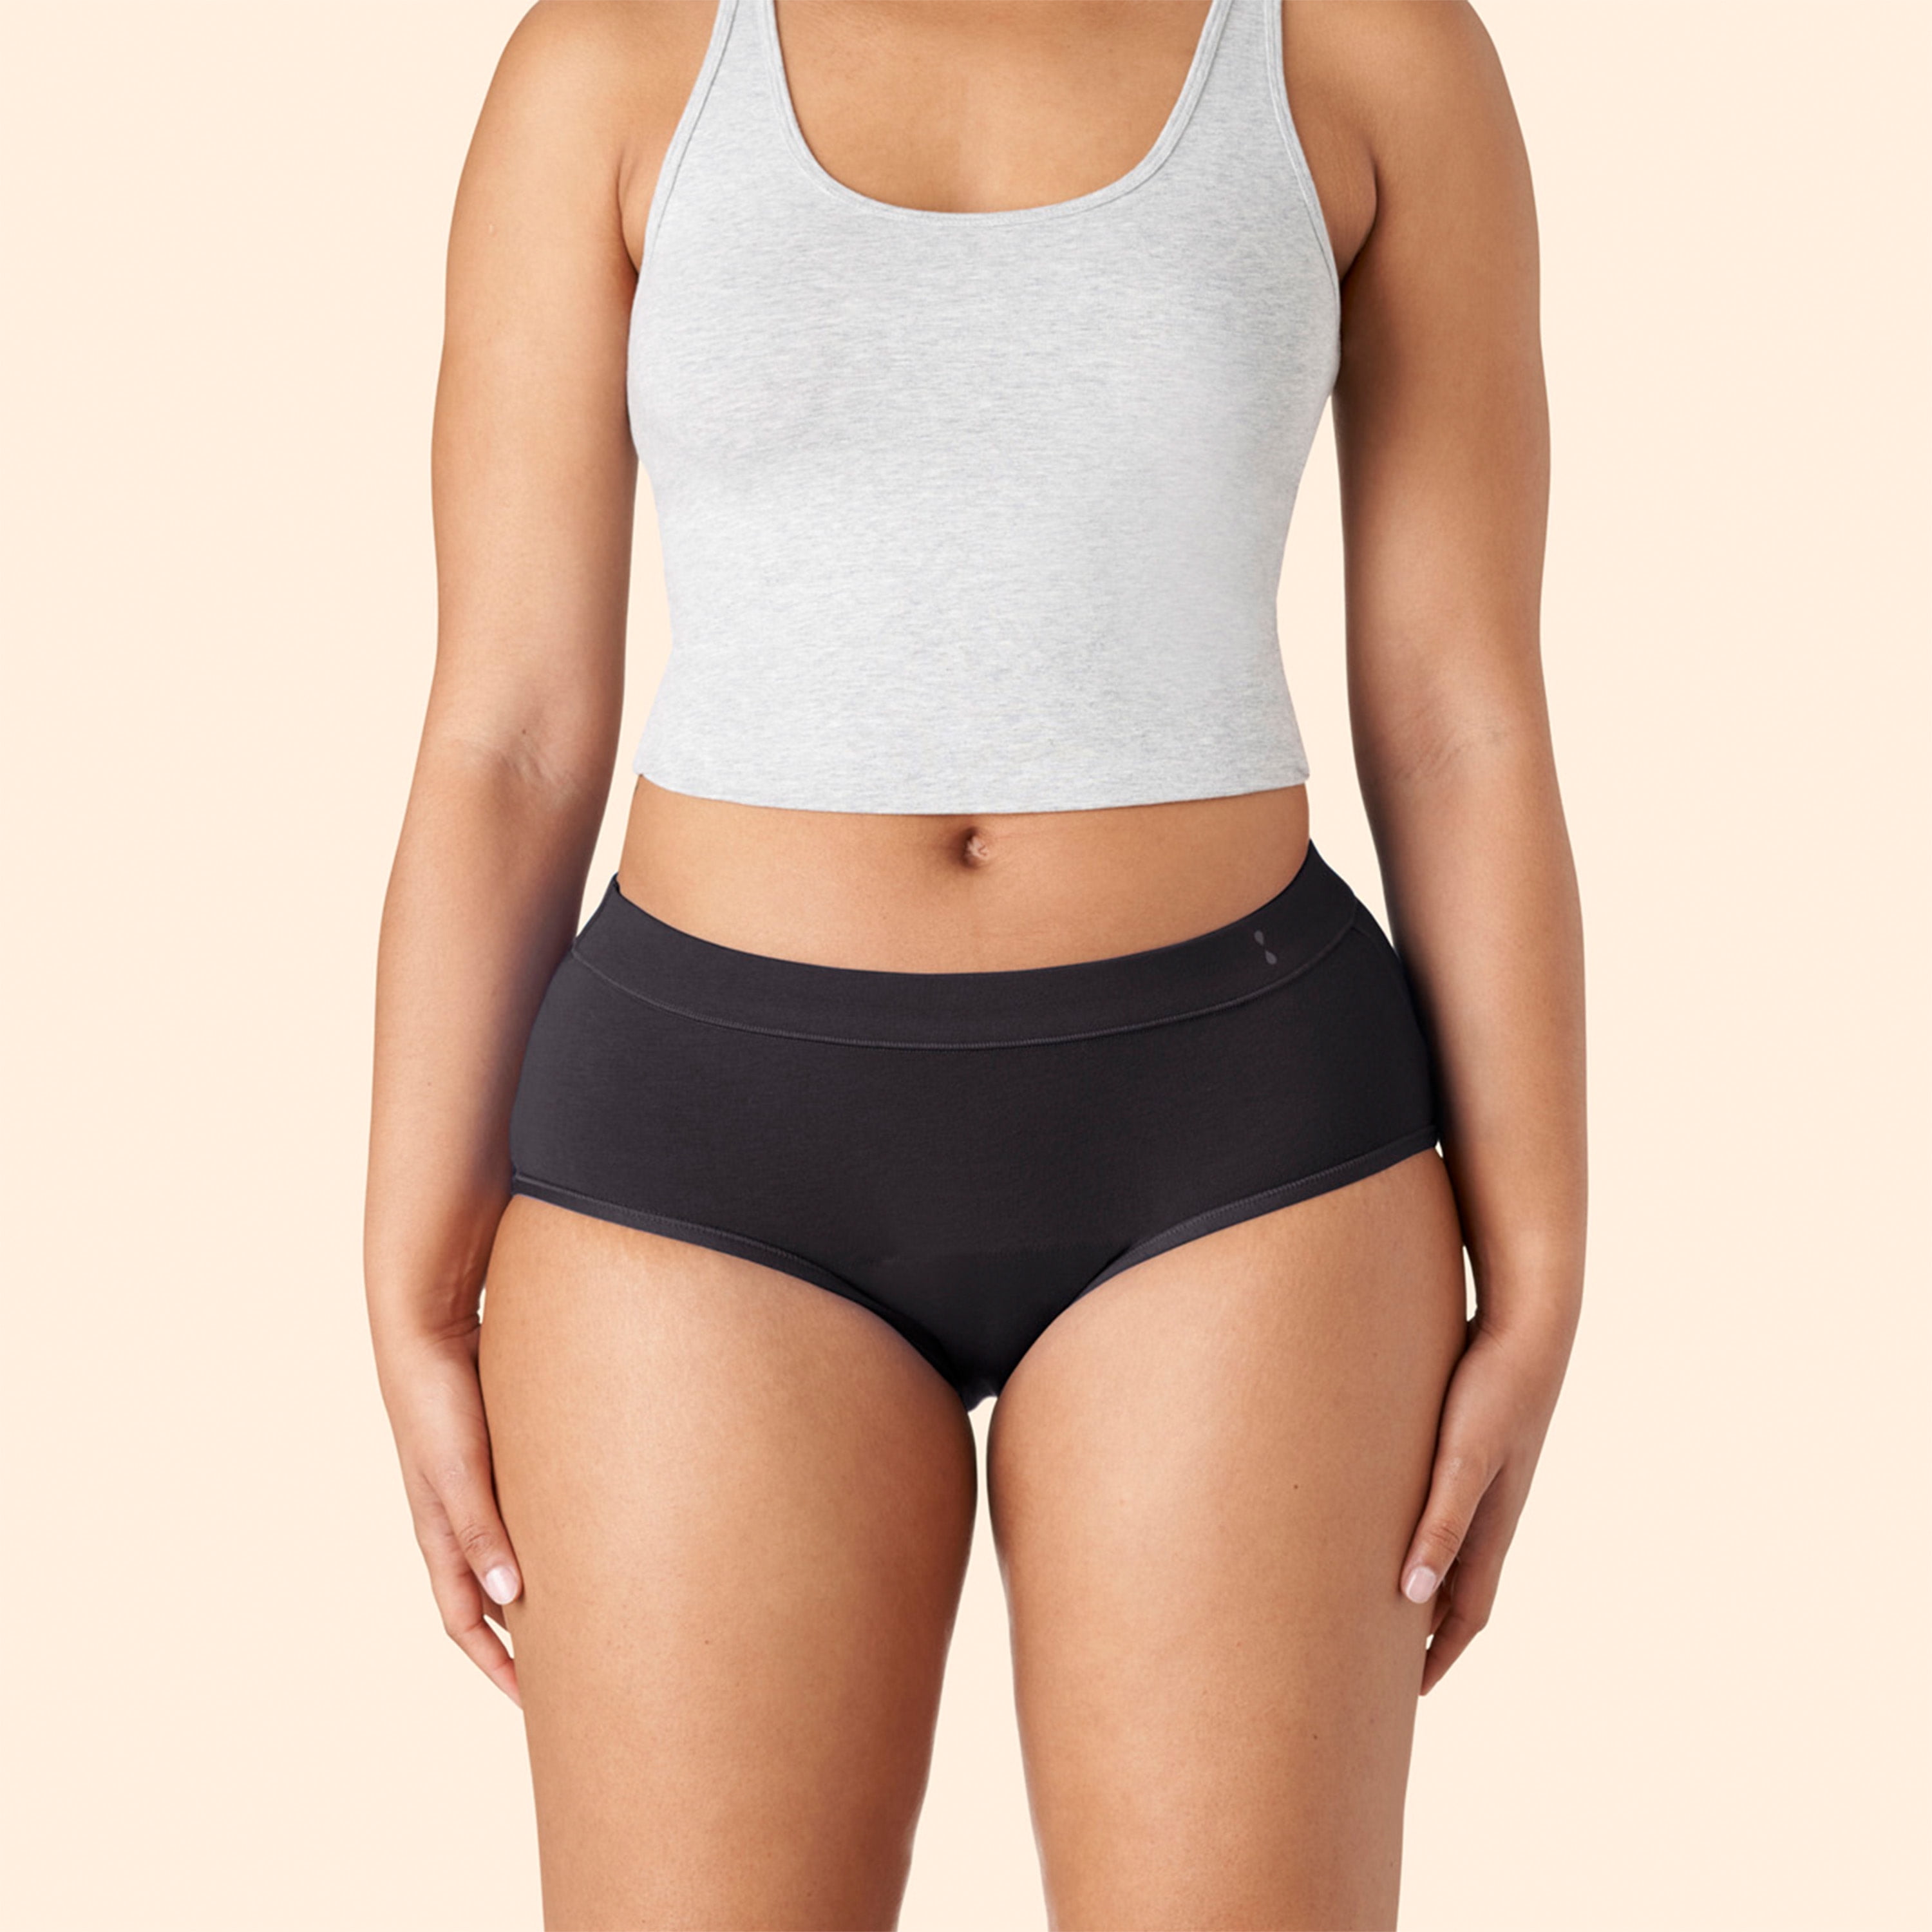 Thinx for All Women's Super Absorbency Cotton Brief Period Underwear,  Small, Black